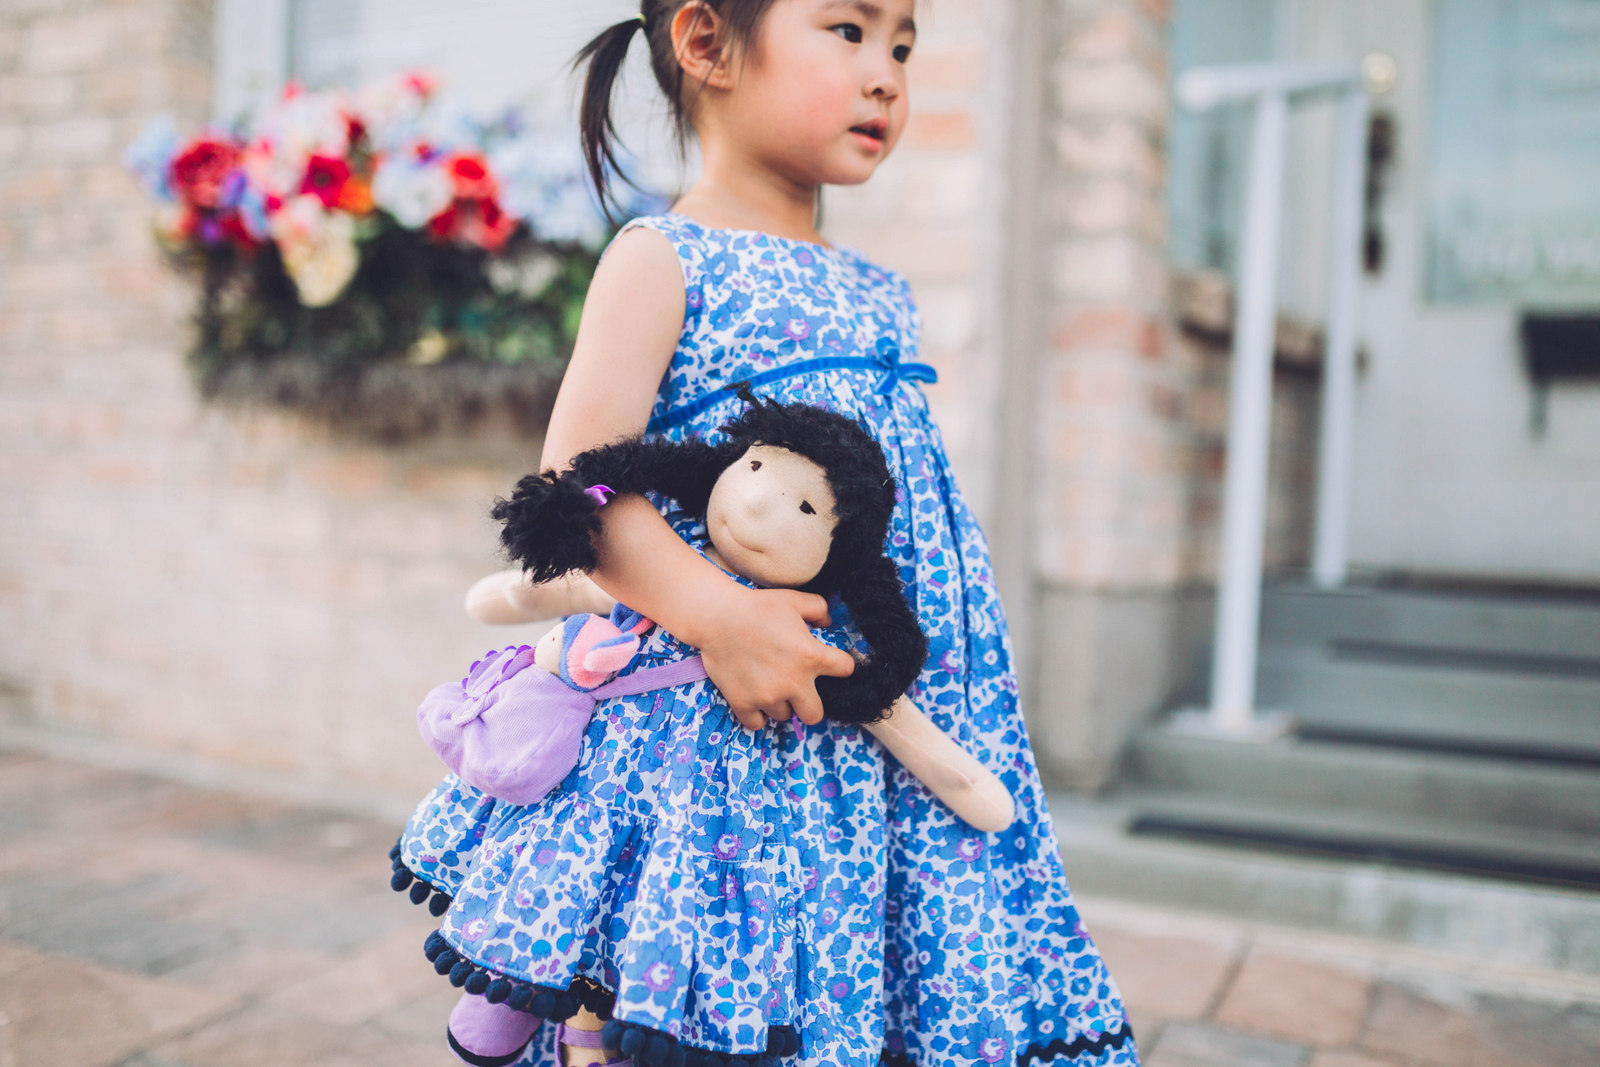 Matching Girl and Doll Outfits by Utah blogger SandyALaMode